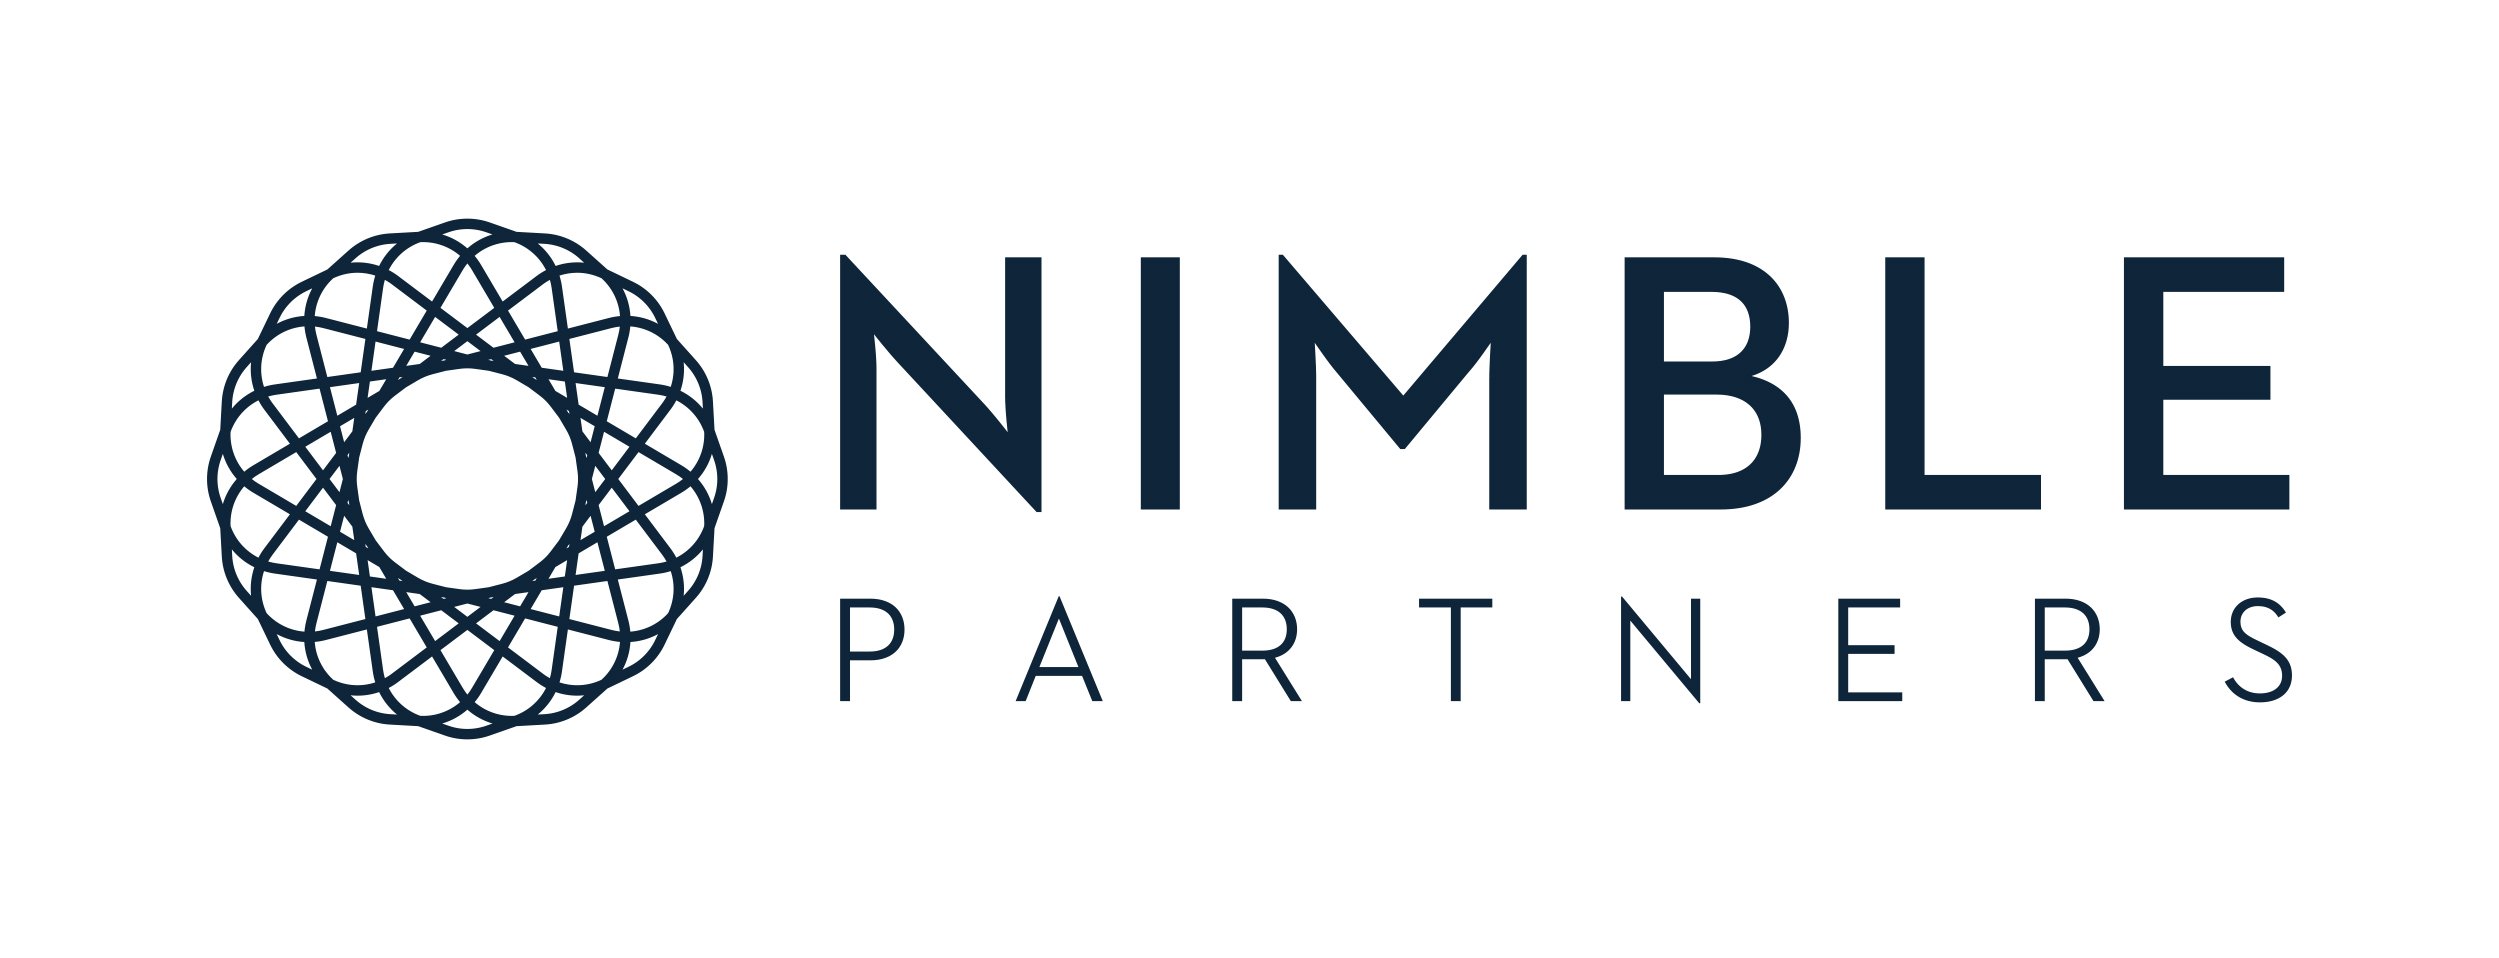 NimblePartners-Logo-1.jpg